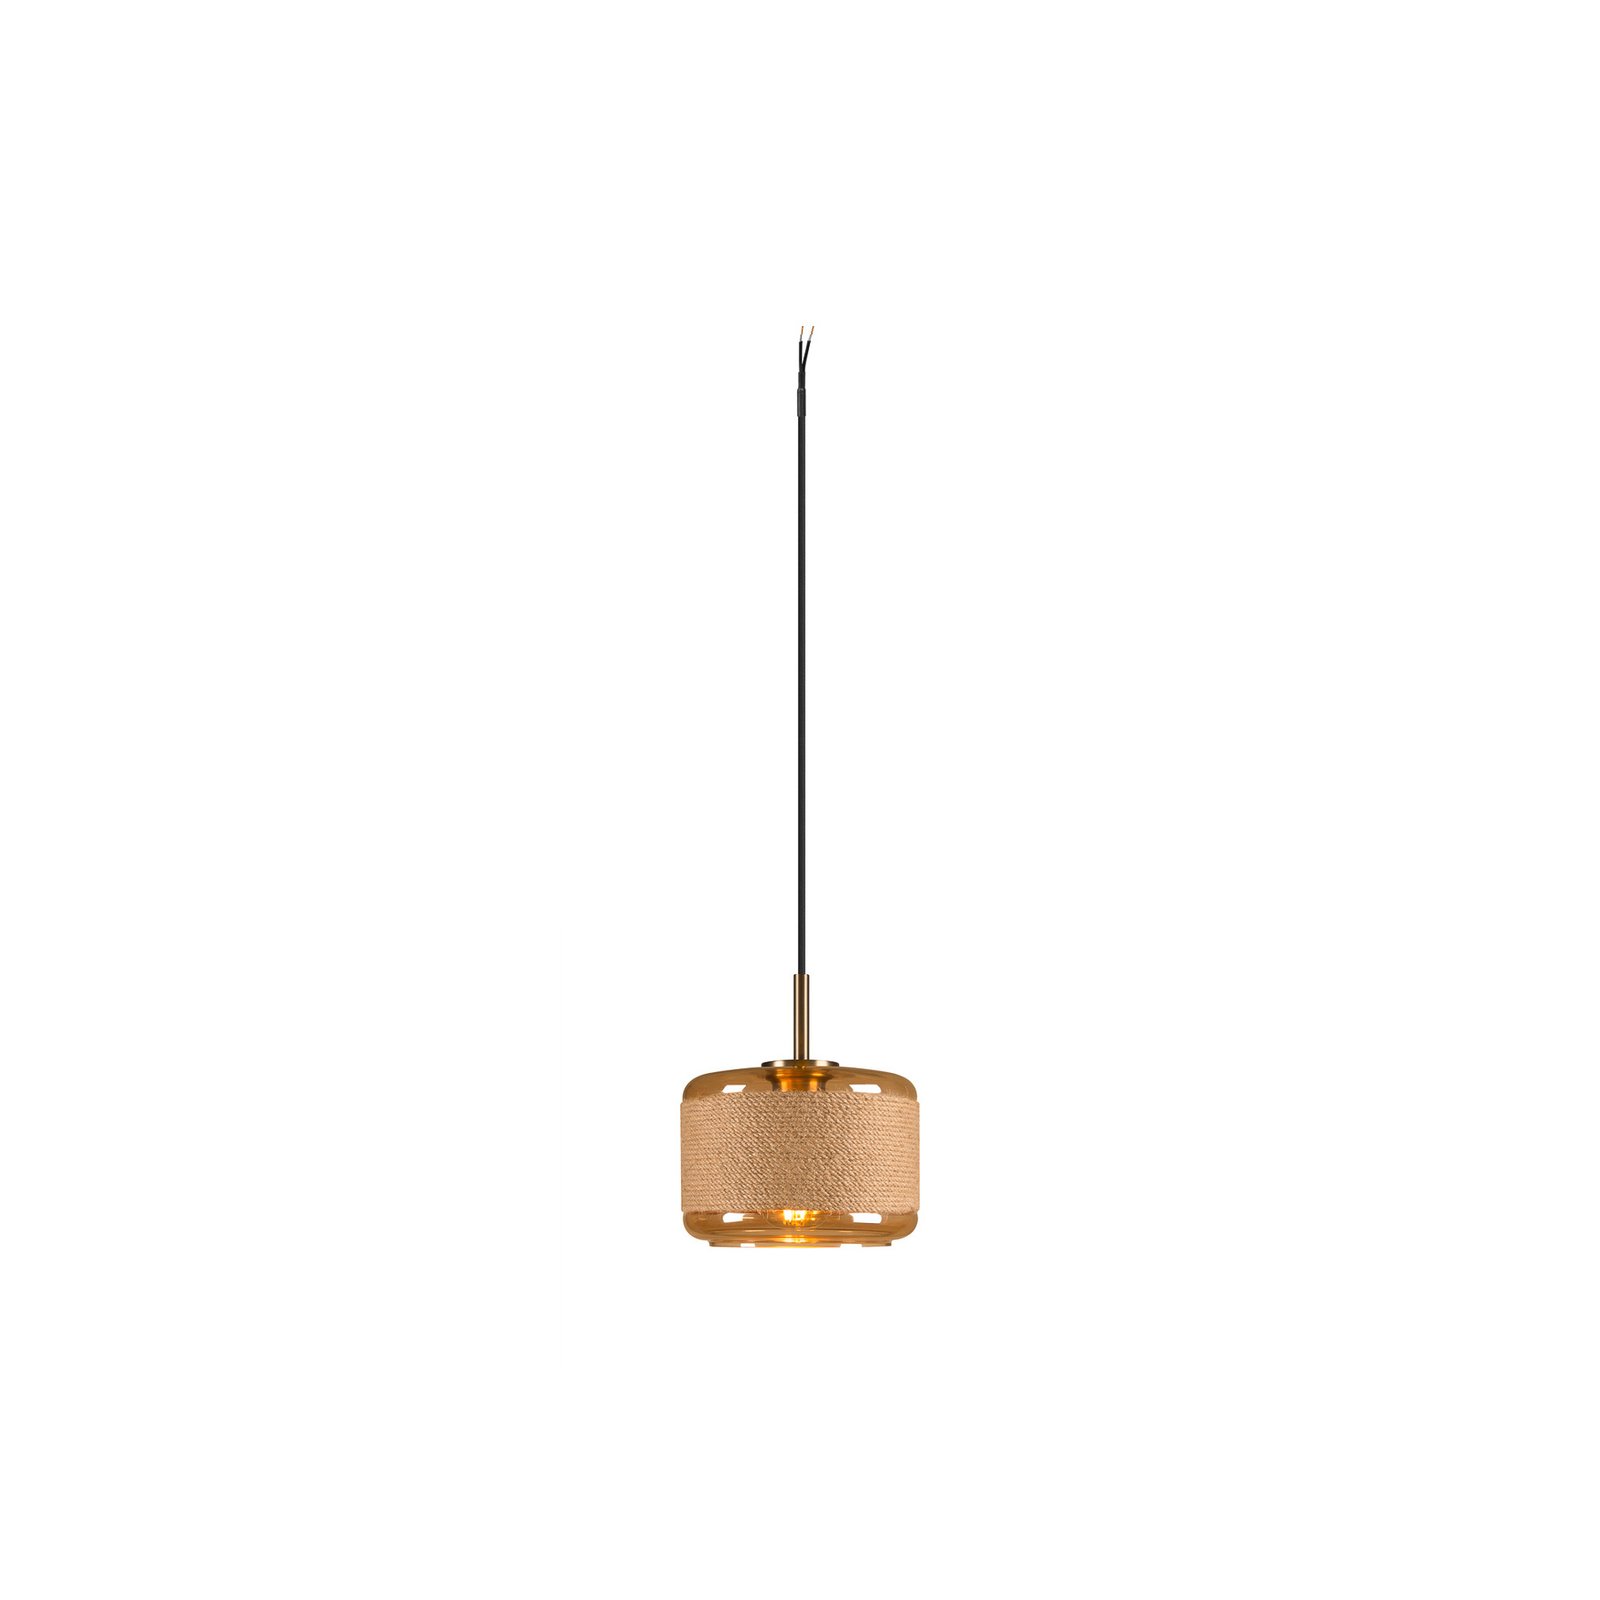 Lampa wisząca Pantilo Rope 19, kolor złoty, stal, Ø 18,5 cm